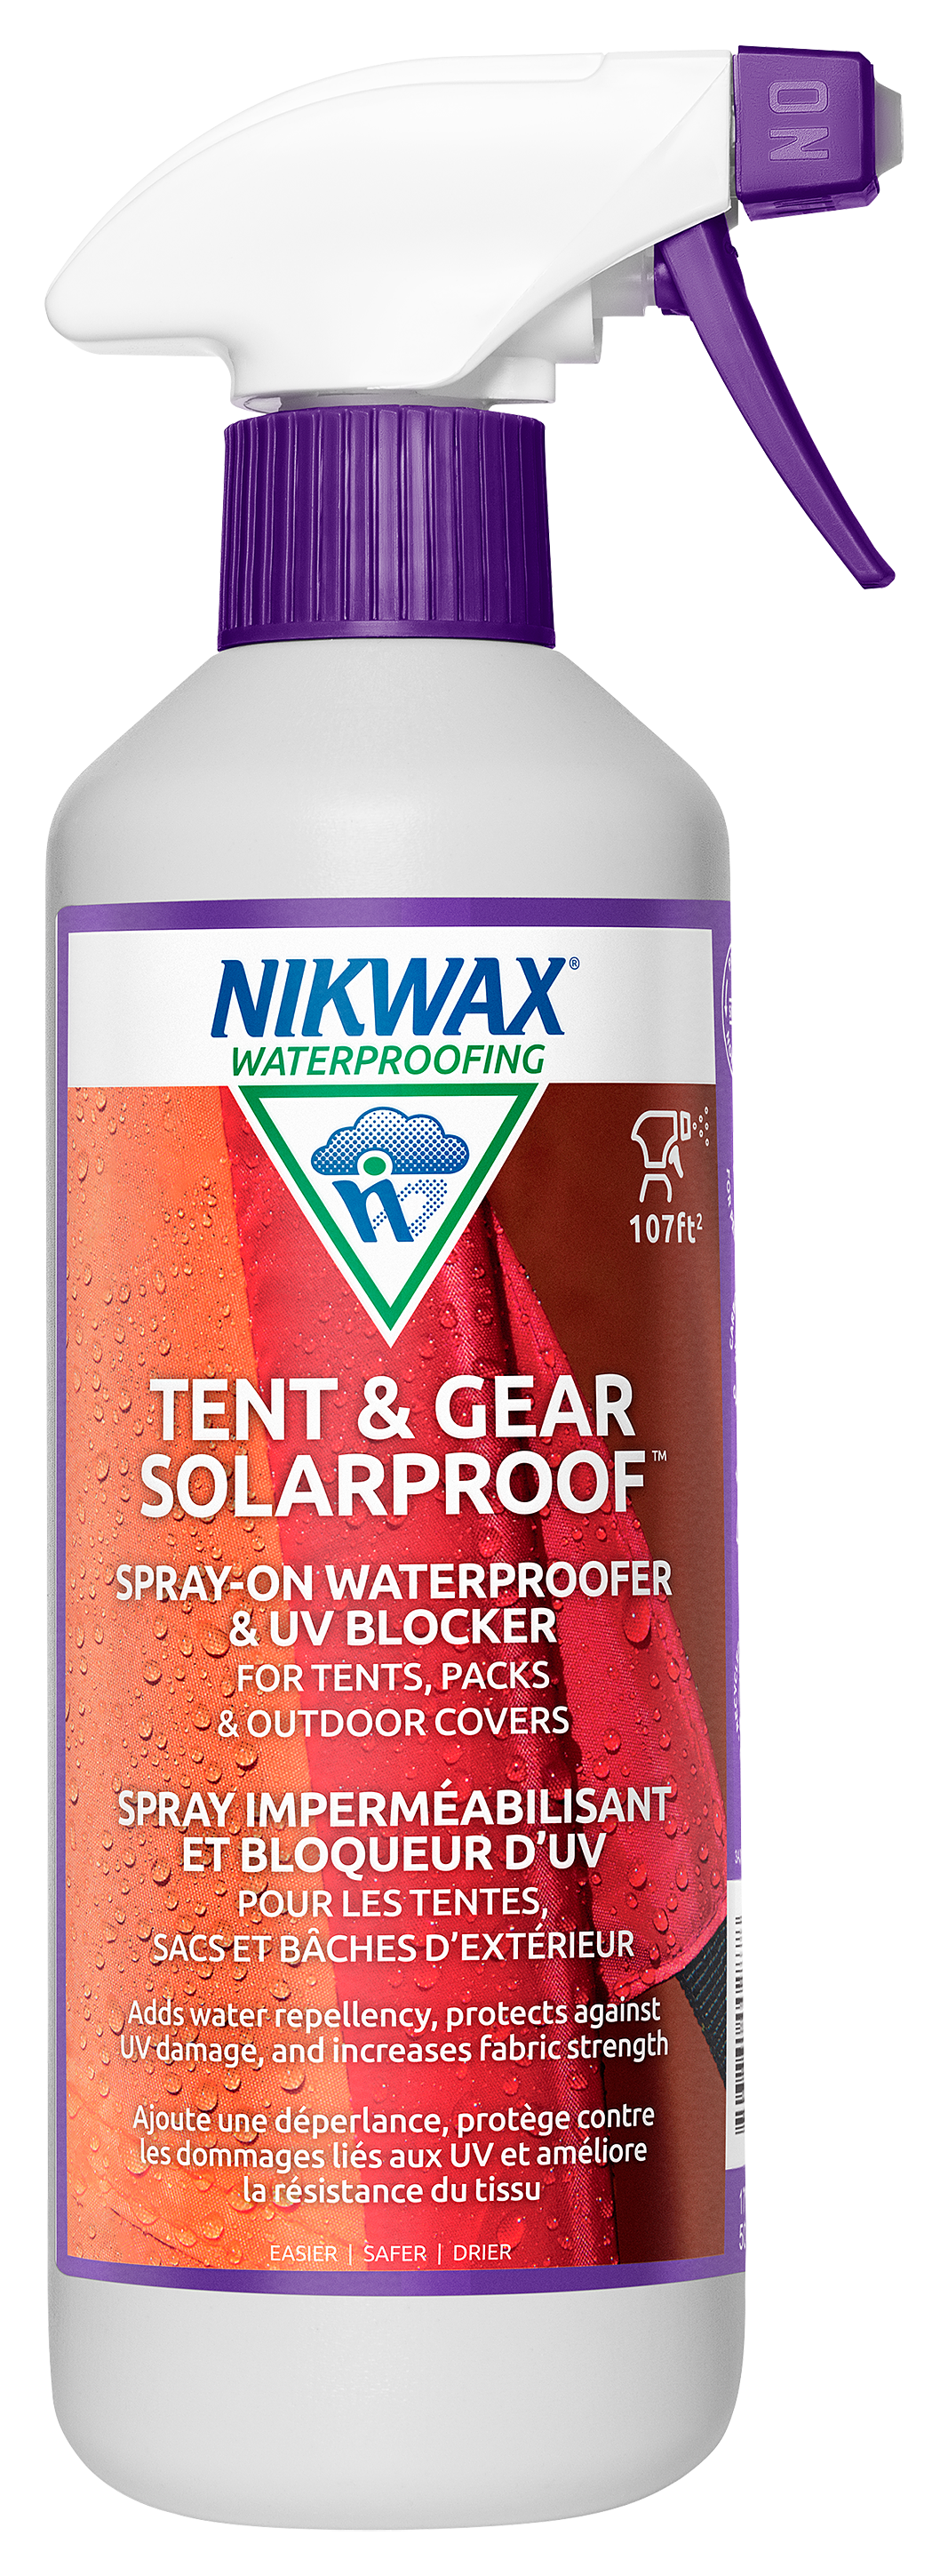 bizon Leerling Augment Nikwax Tent and Gear SolarProof Waterproofing and UV Treatment | Cabela's